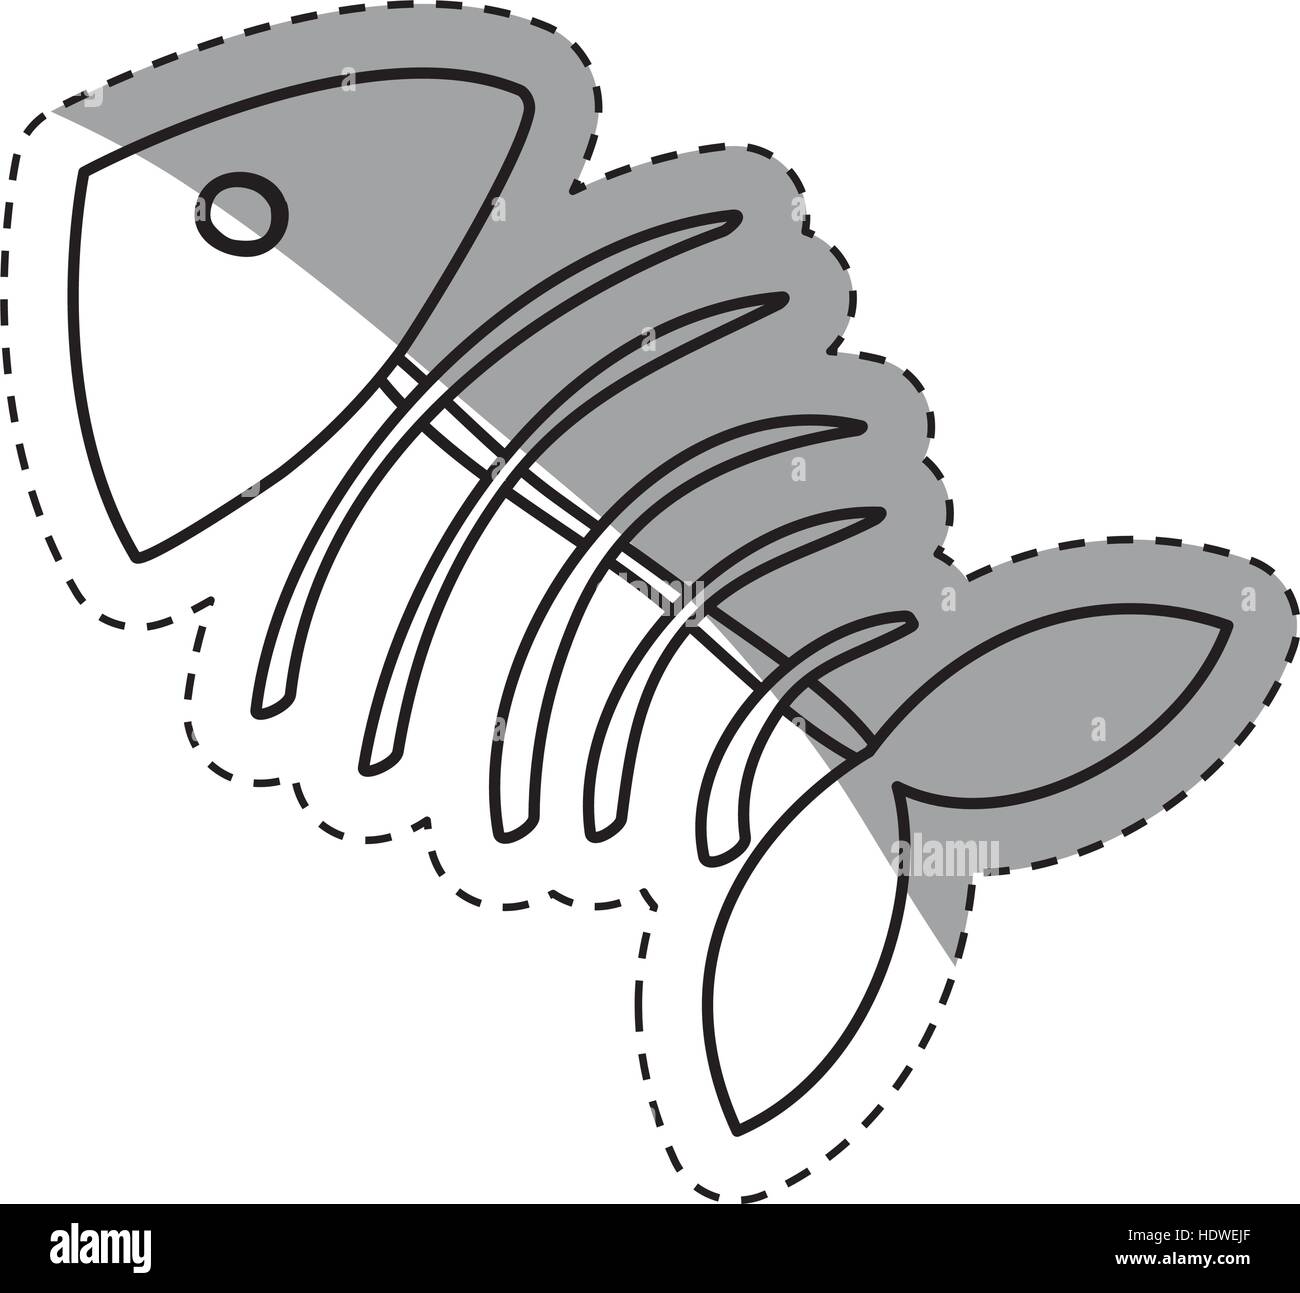 Cartoon fish skeleton icon vector illustration graphic design